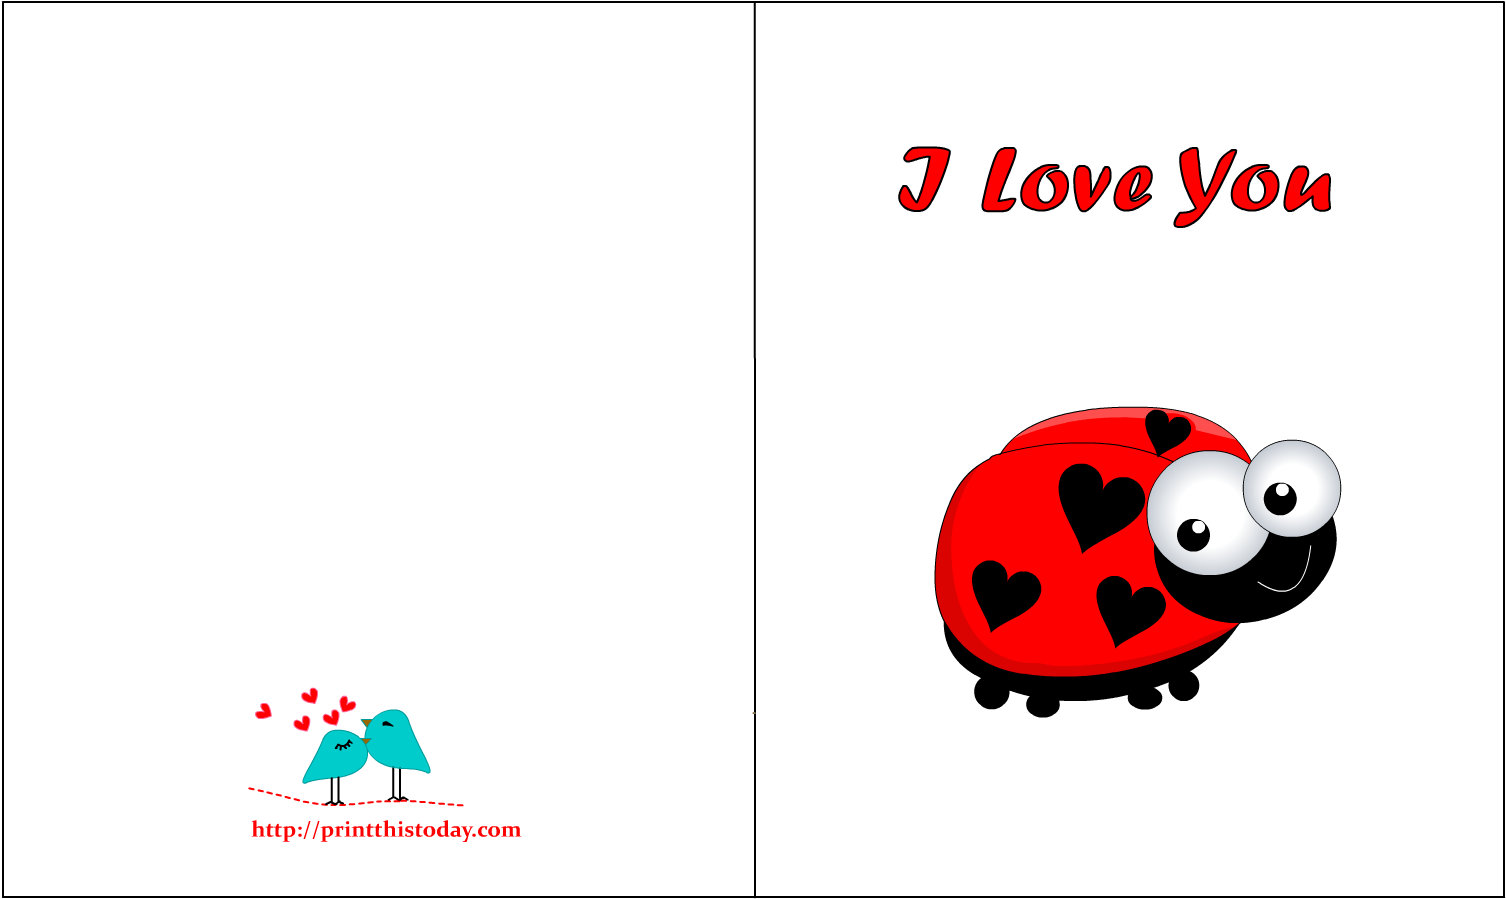 I Love You Card With Lady-bug - Ladybug (1650x1275)